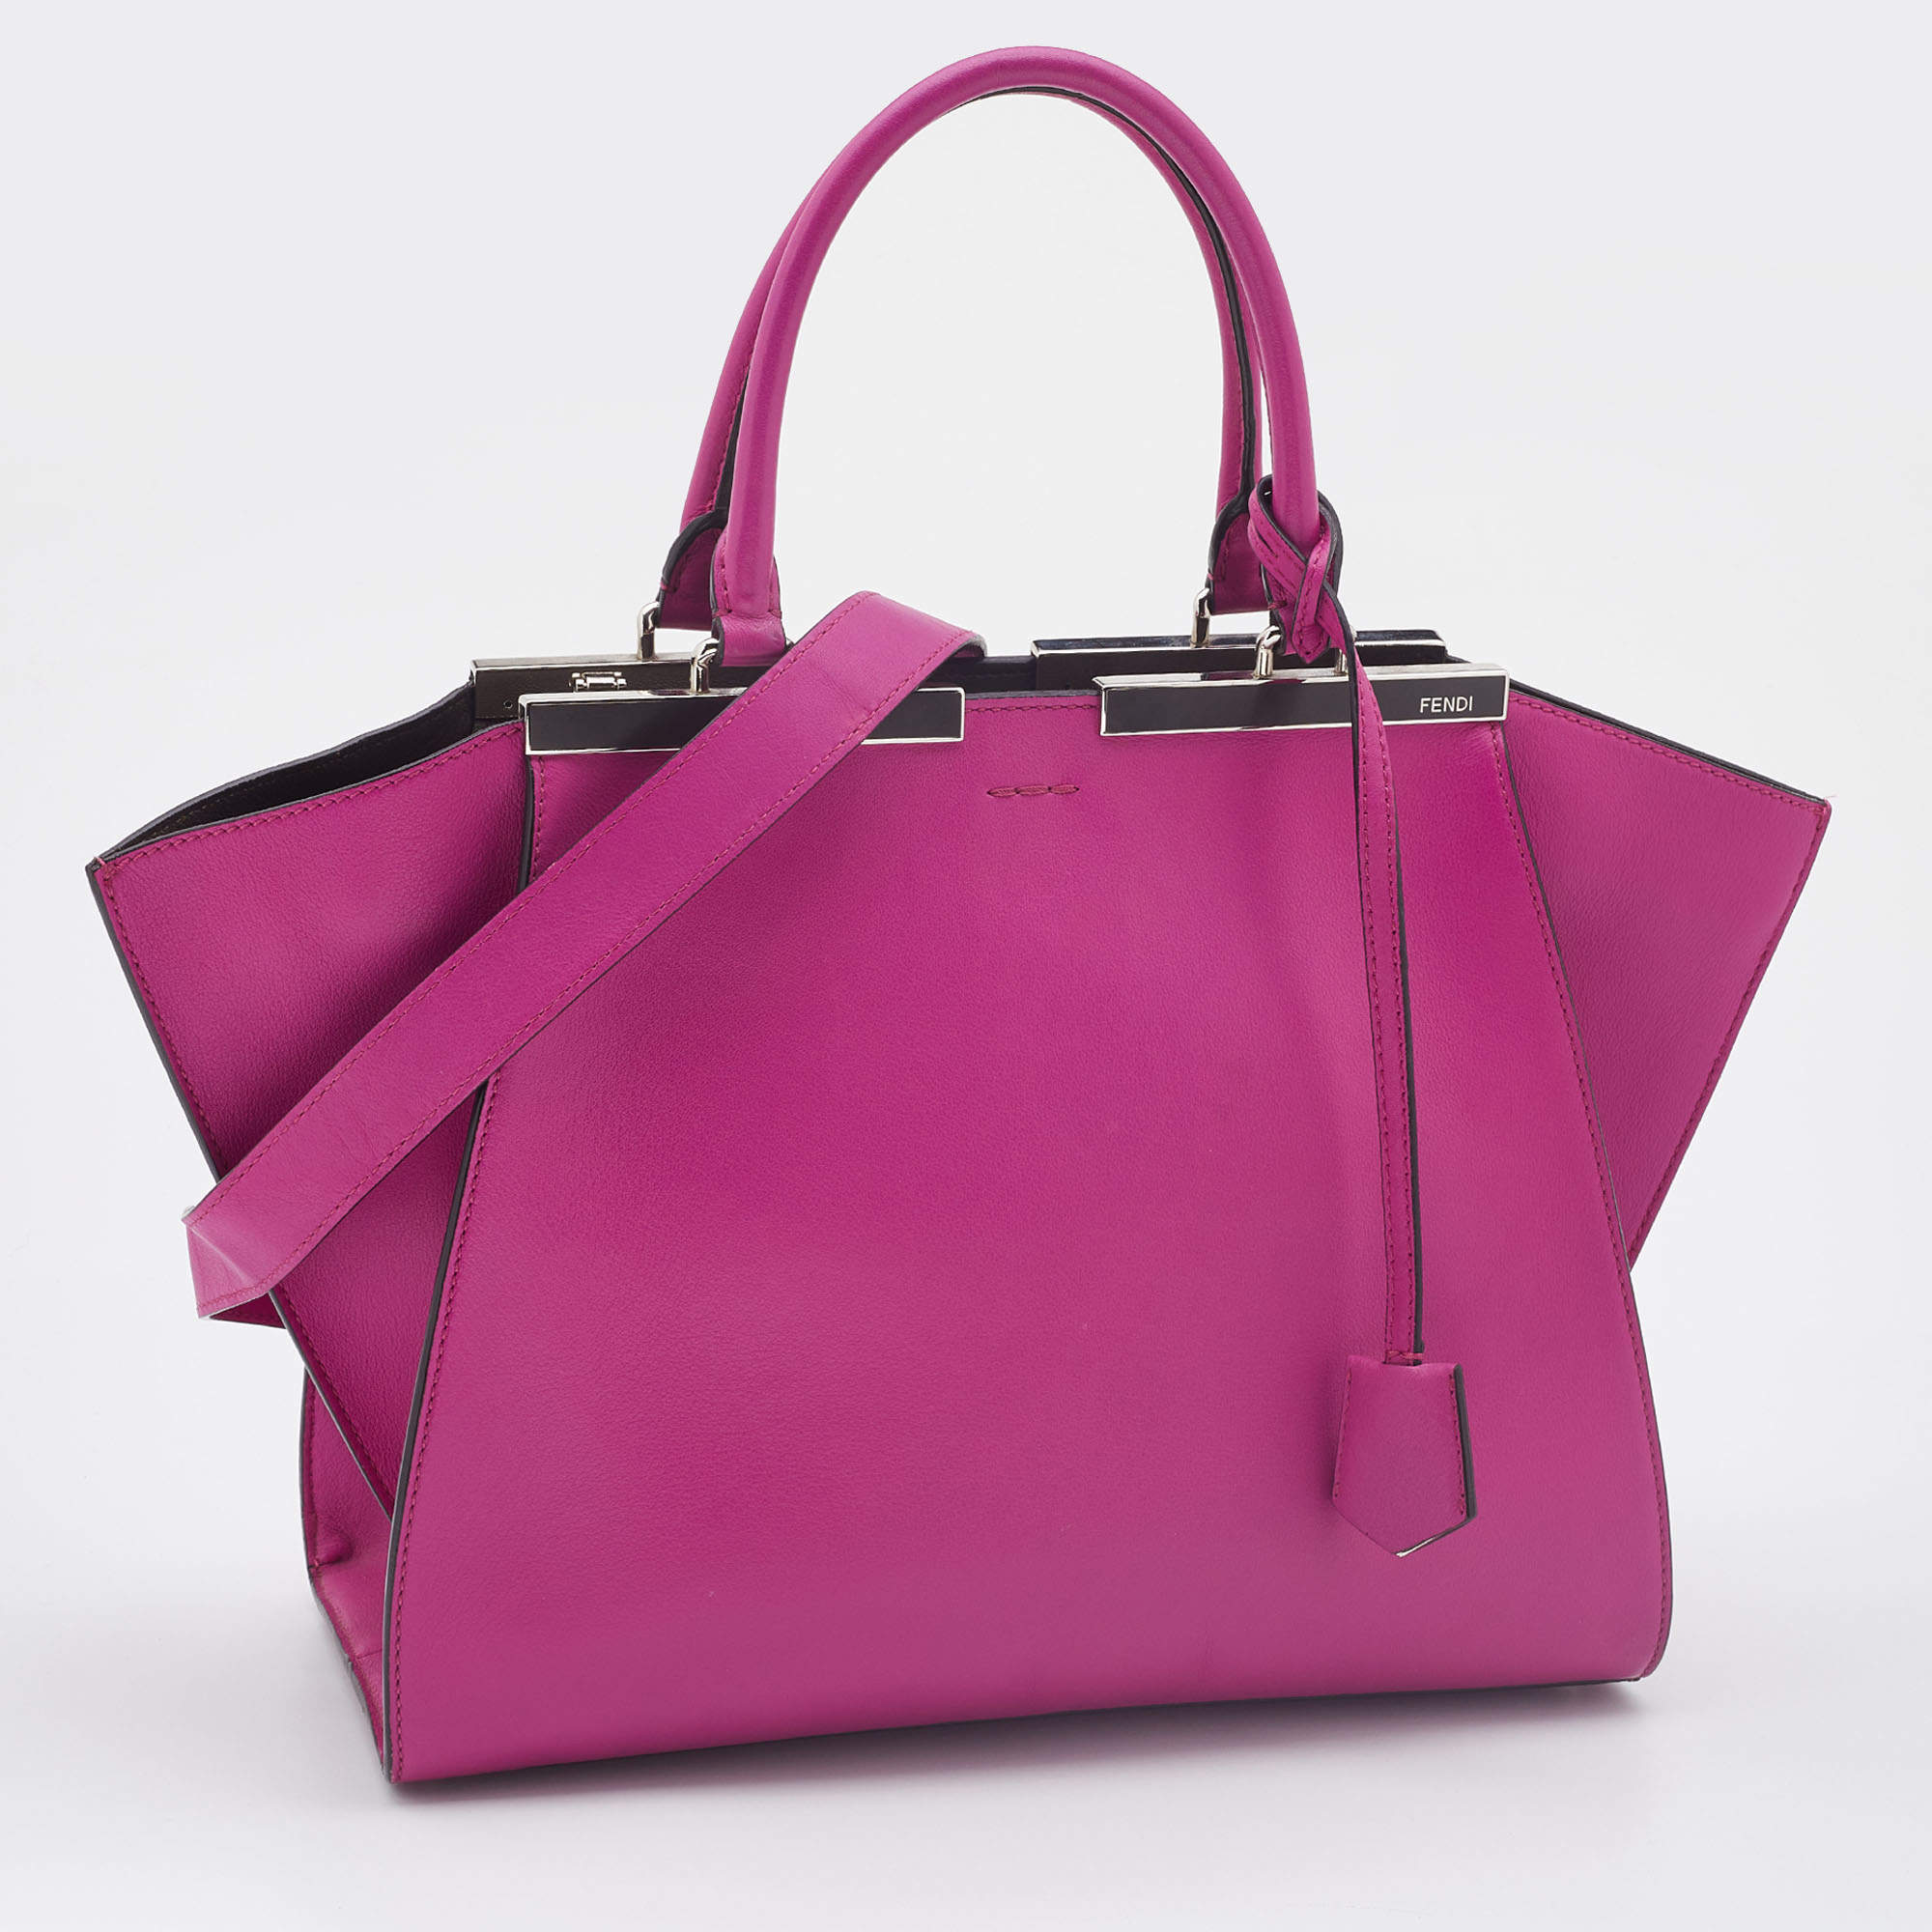 FENDI Women's Handbag Leather in Pink | Second Hand